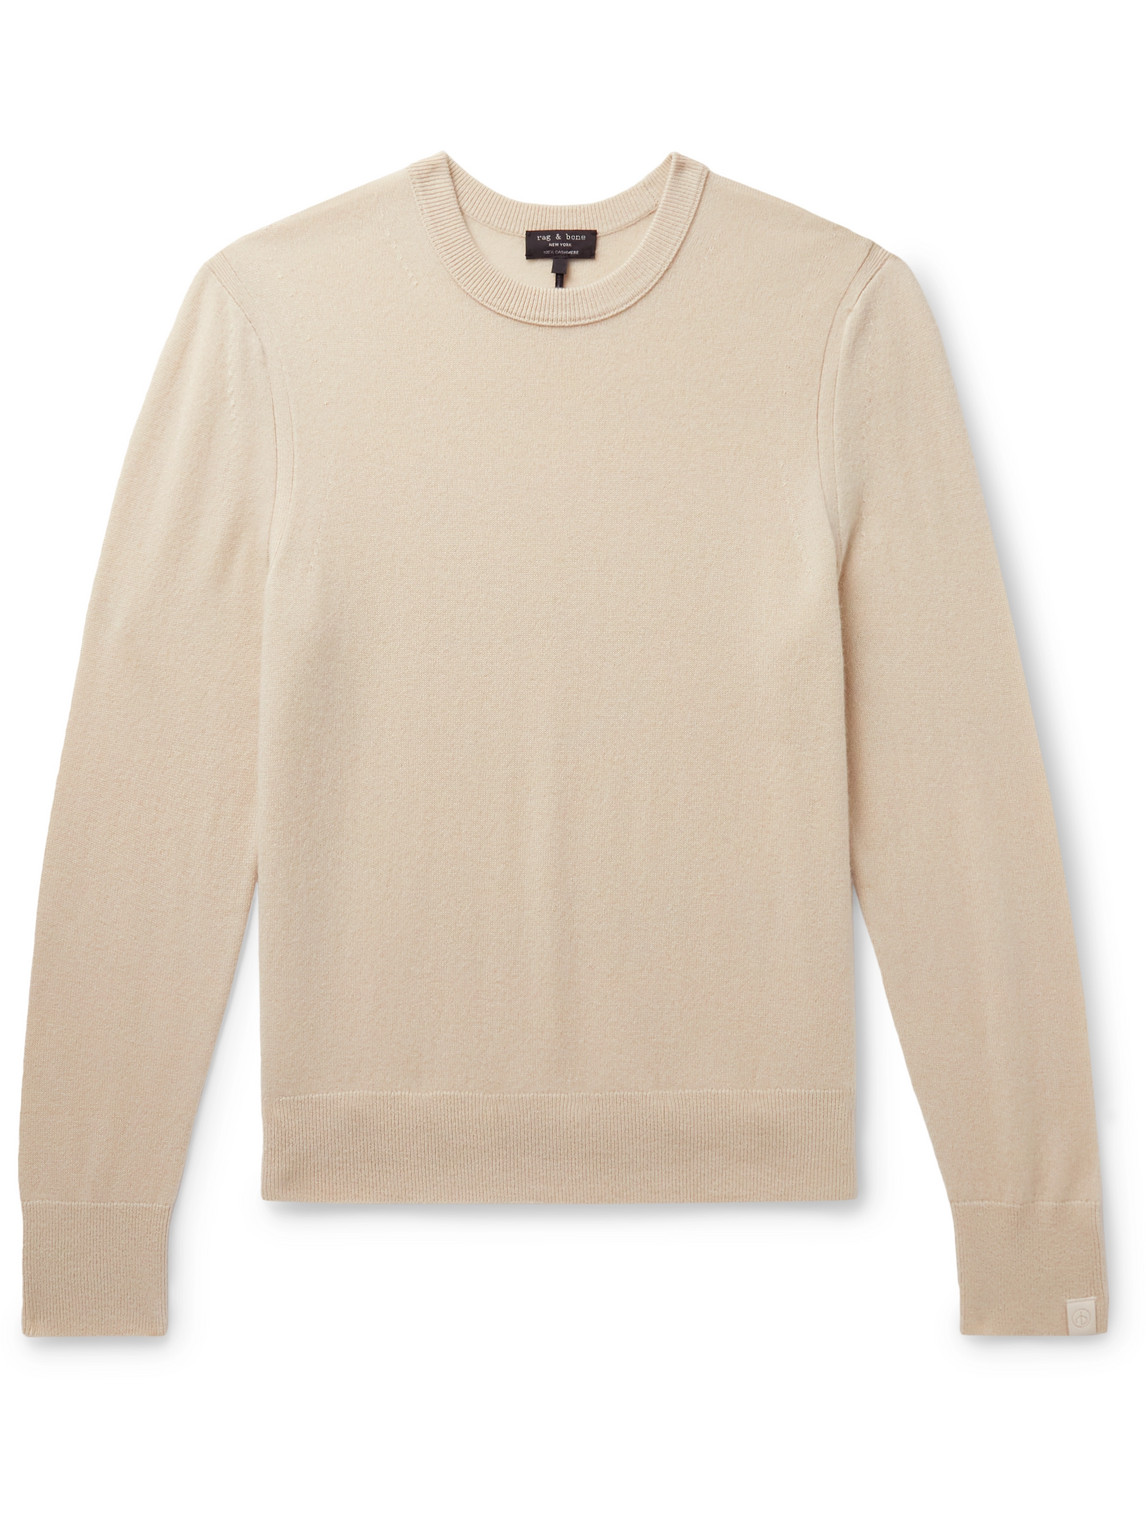 Harding Slim-Fit Cashmere Sweater